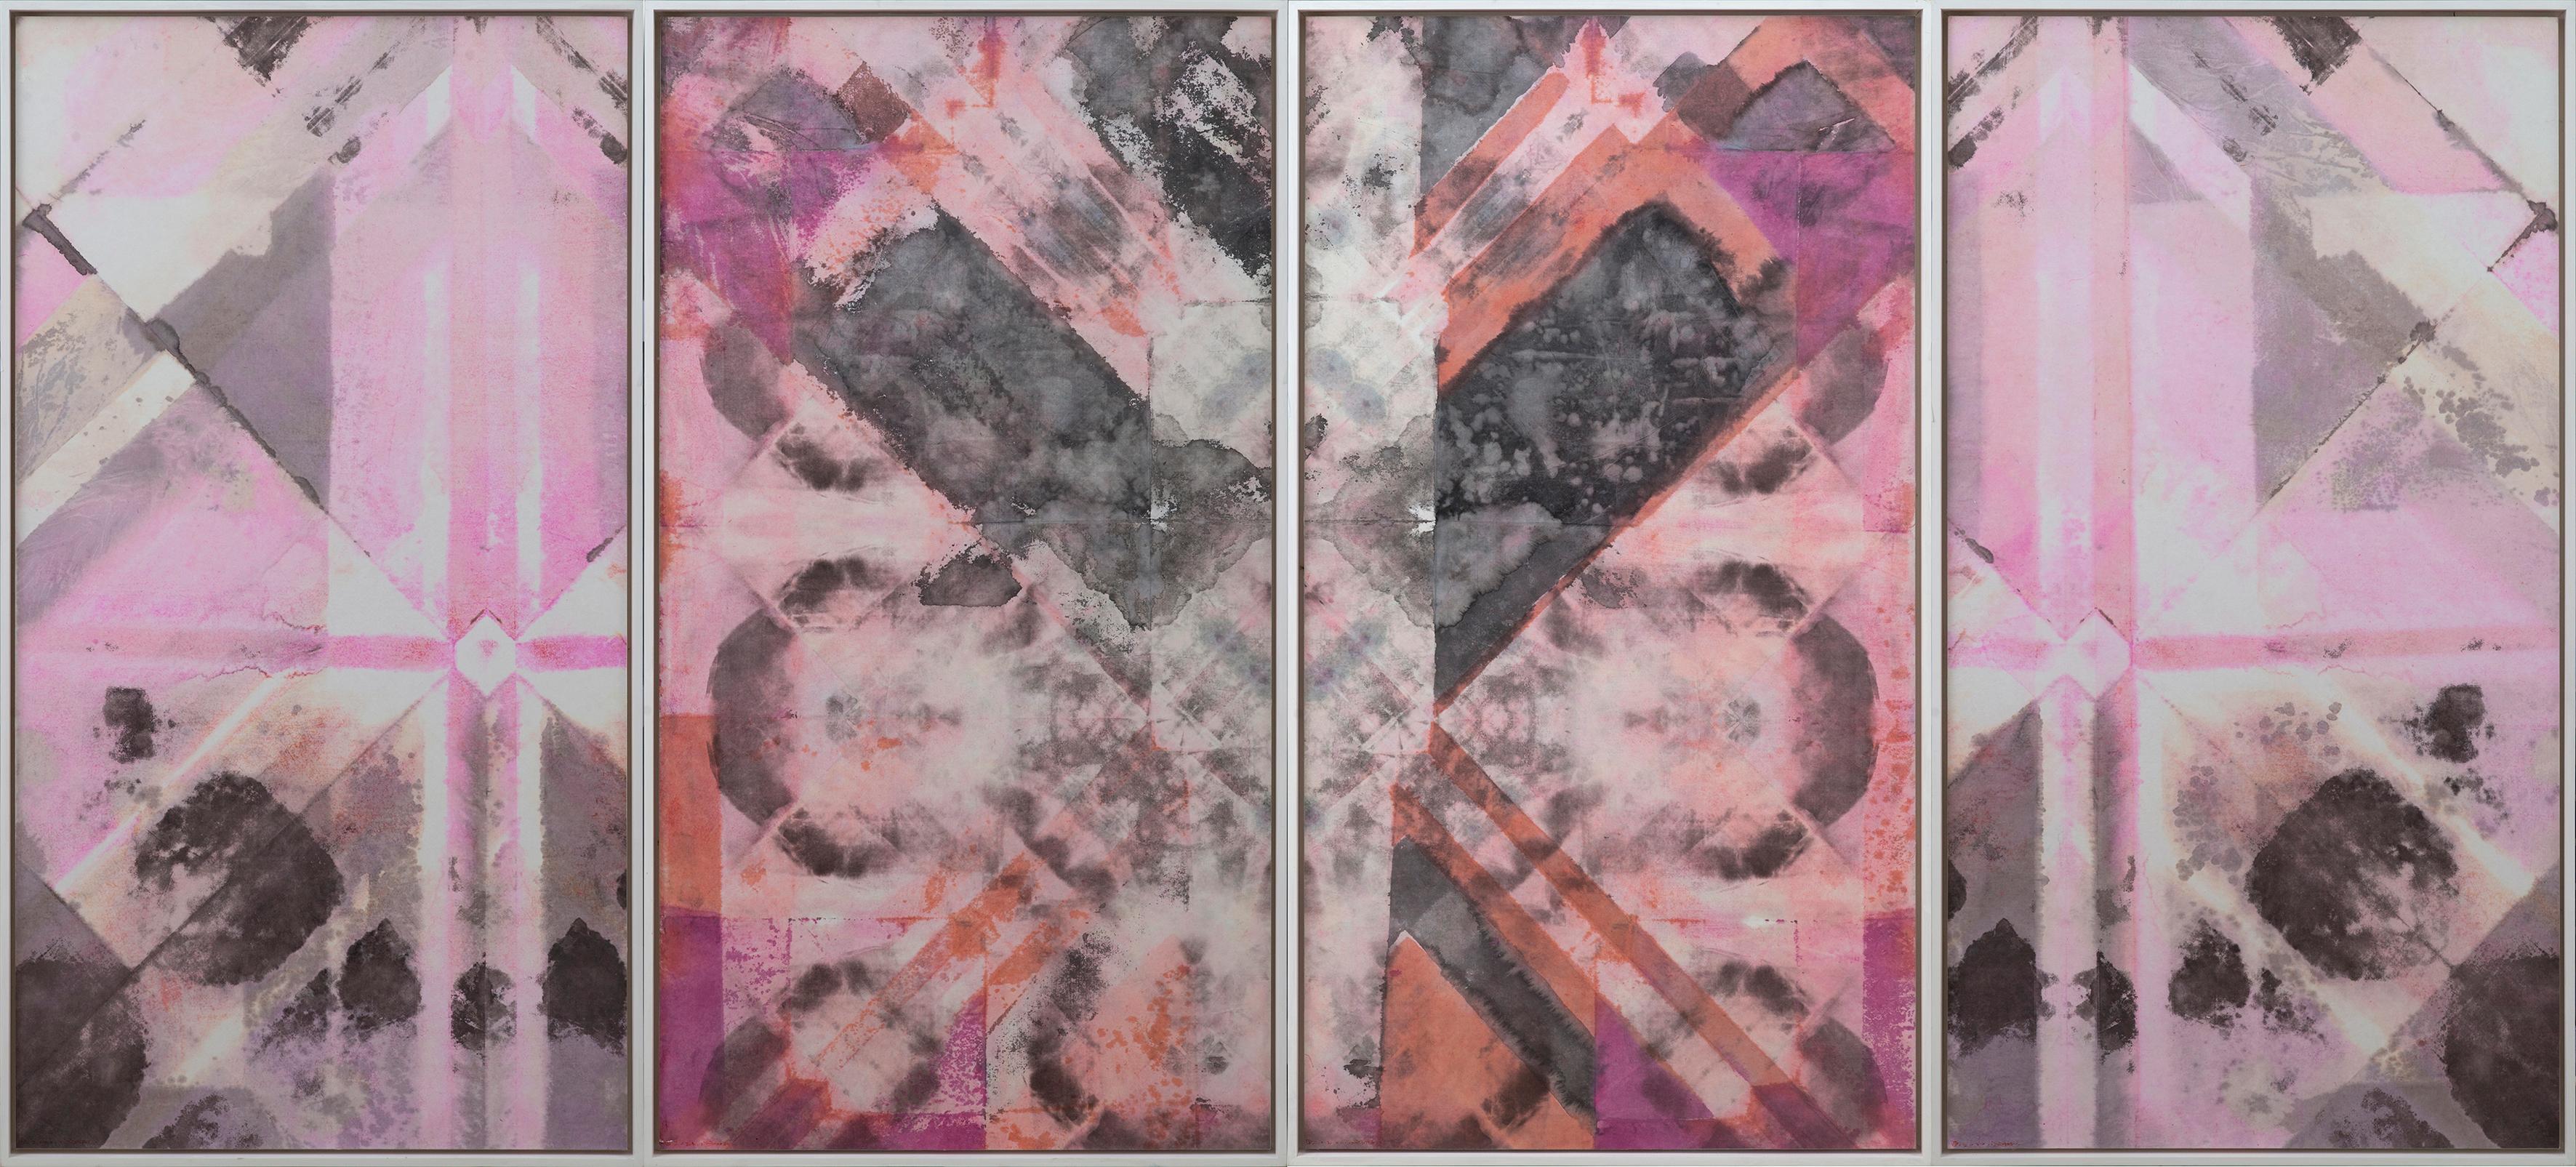 Abstract Painting de Liu Gang  - Abstracción geométrica contemporánea - Pintura en técnica mixta-411010202